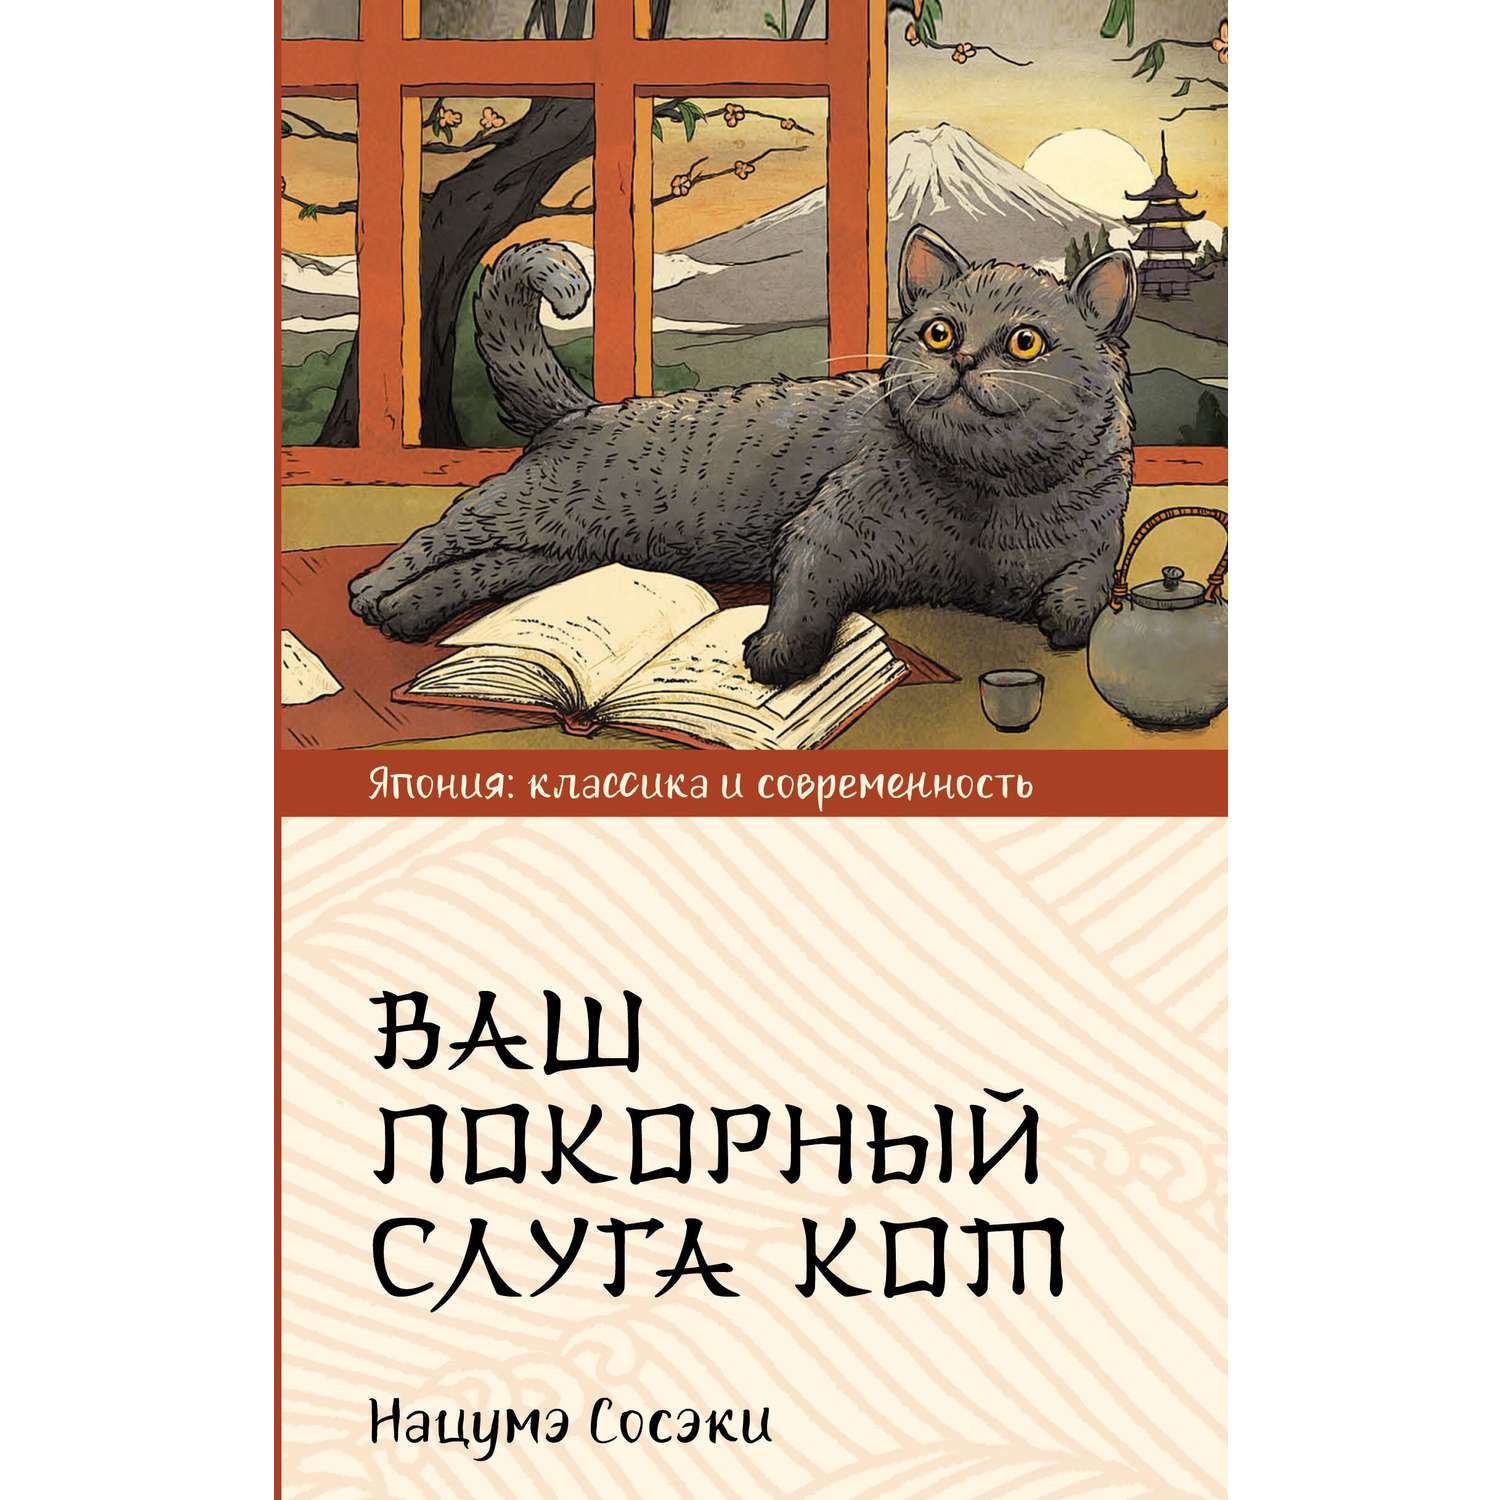 Книга АСТ Ваш покорный слуга кот - фото 1